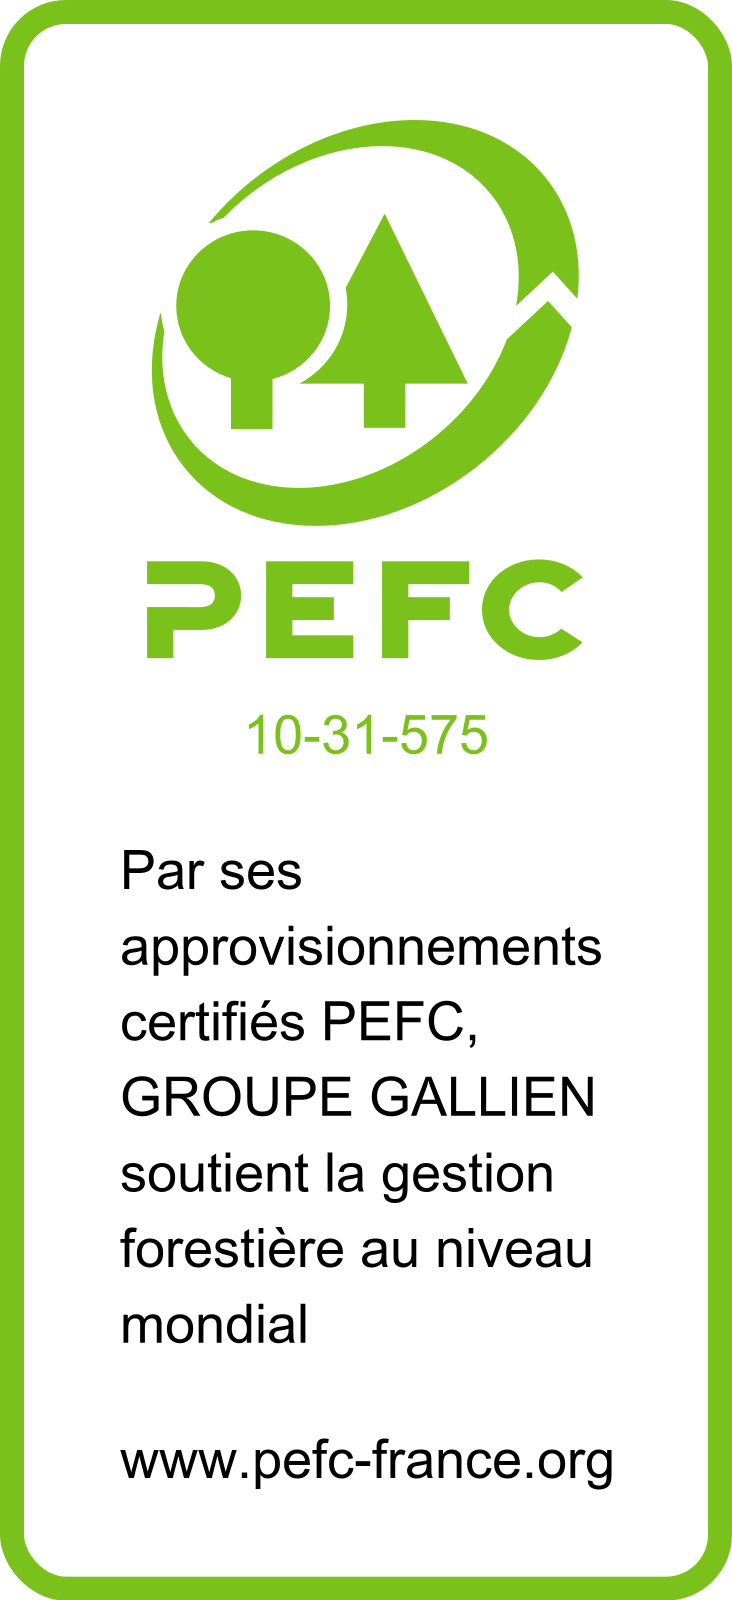 pefc label pefc10 31 575 logo pefc groupe gallien Environnement